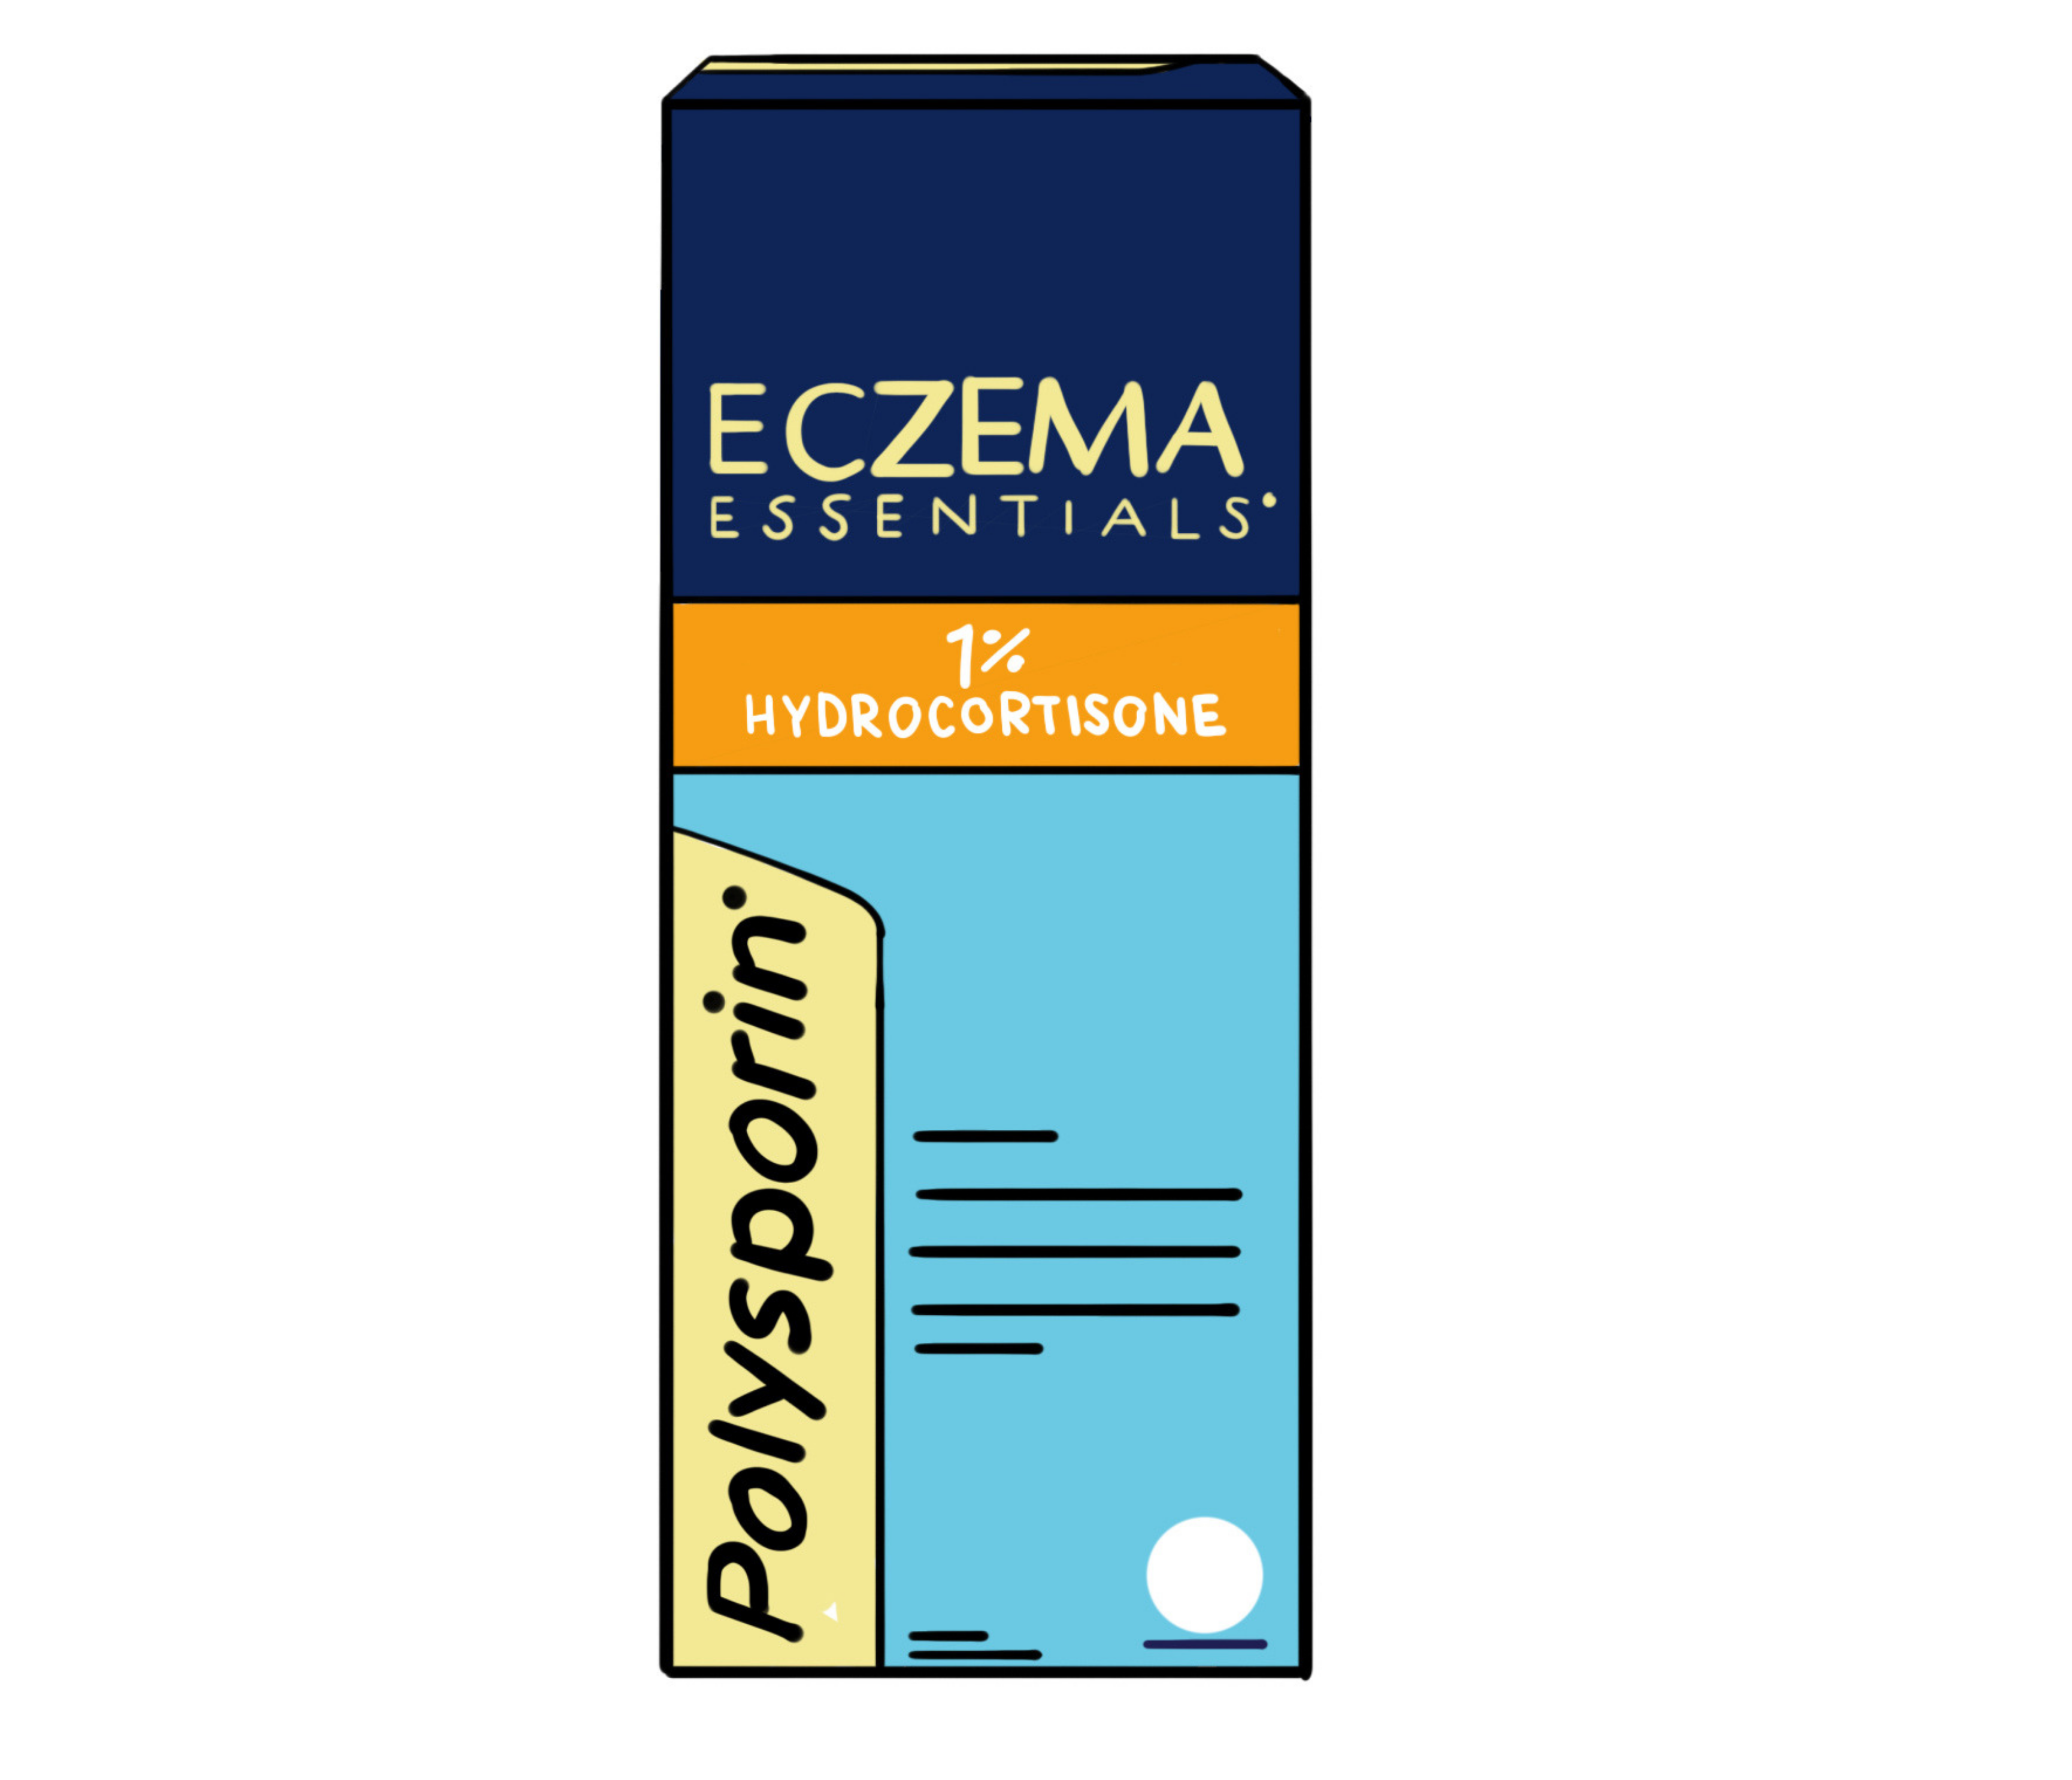 Polysporin Eczema Essentials 1% Hydrocortisone: A review on a hydrocortisone cream over-the-counter